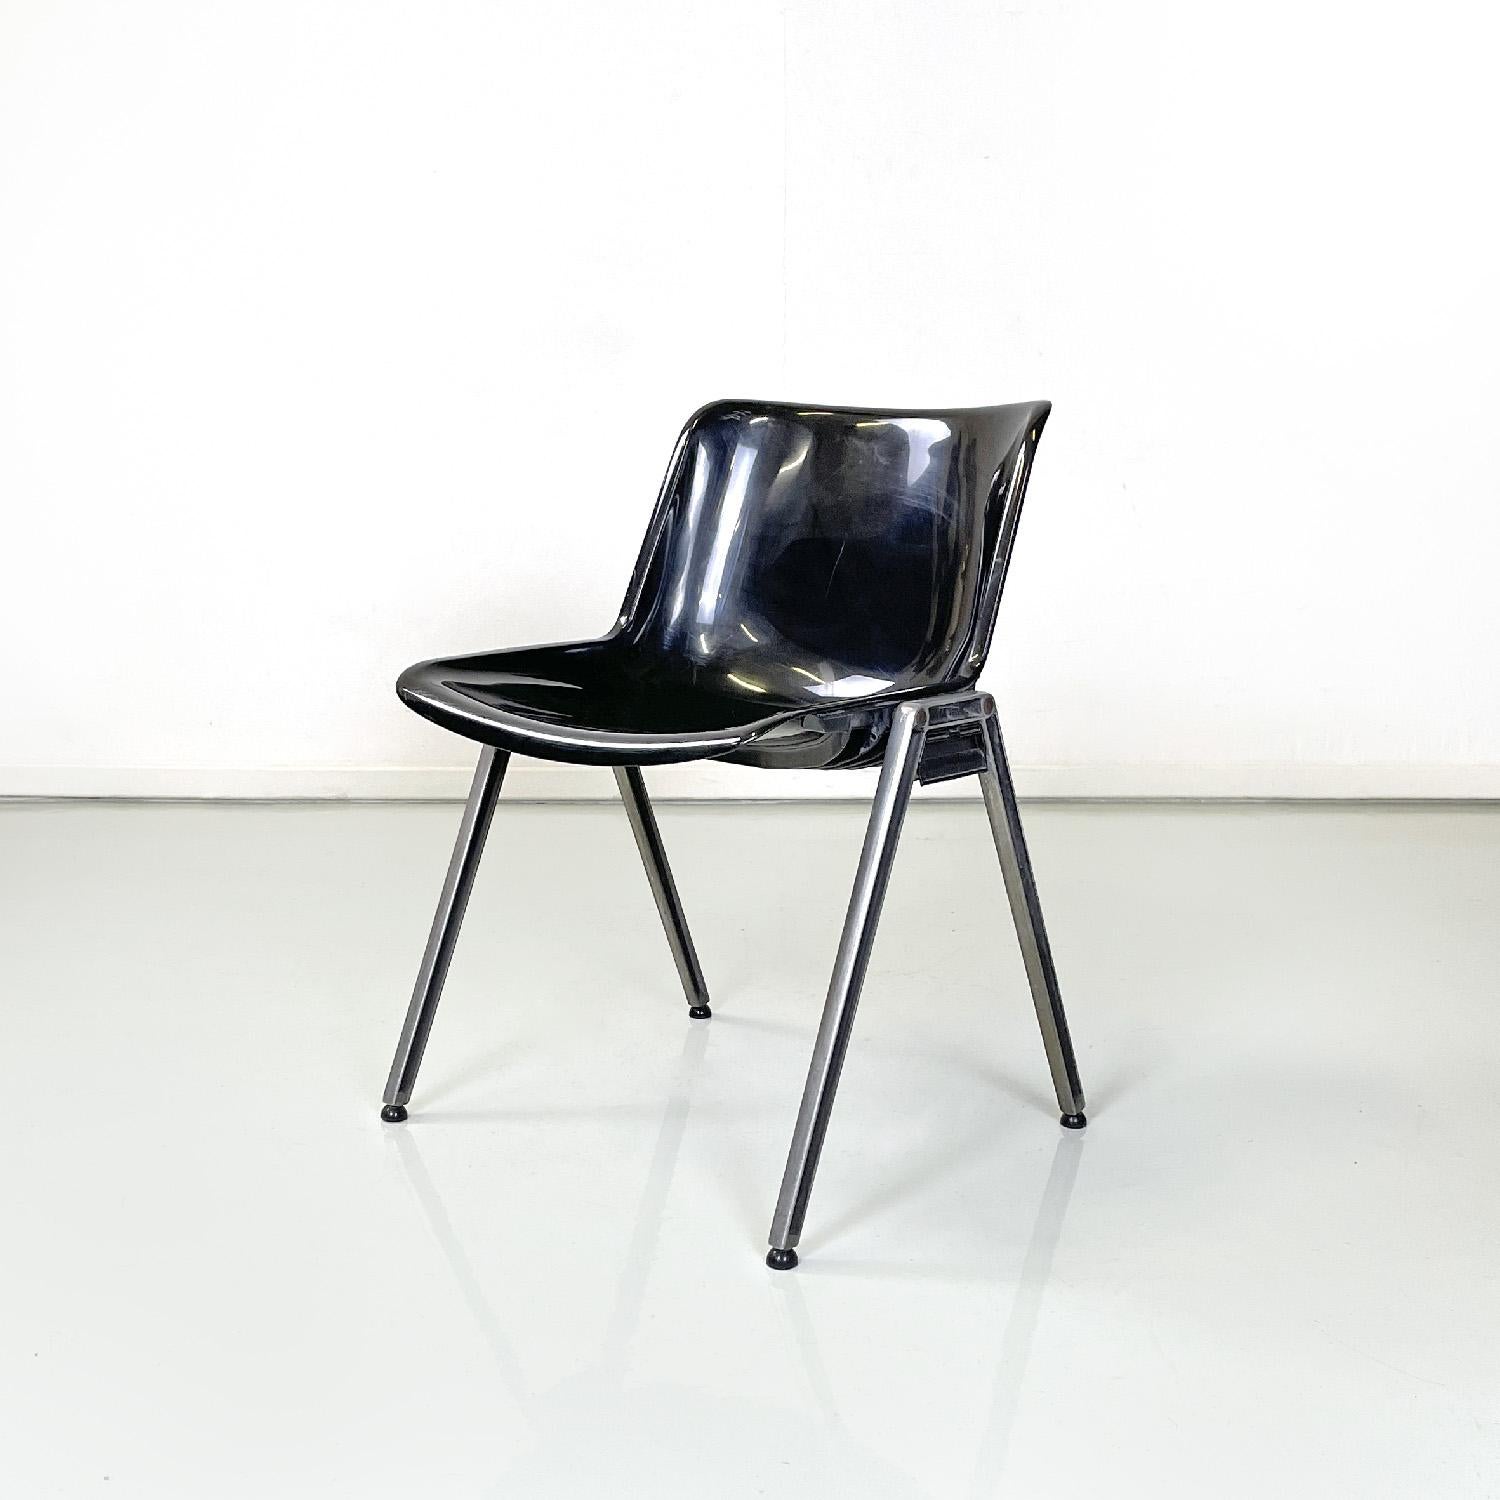 Late 20th Century Italian modern black plastic chairs Modus SM 203 by Borsani for Tecno, 1980s For Sale